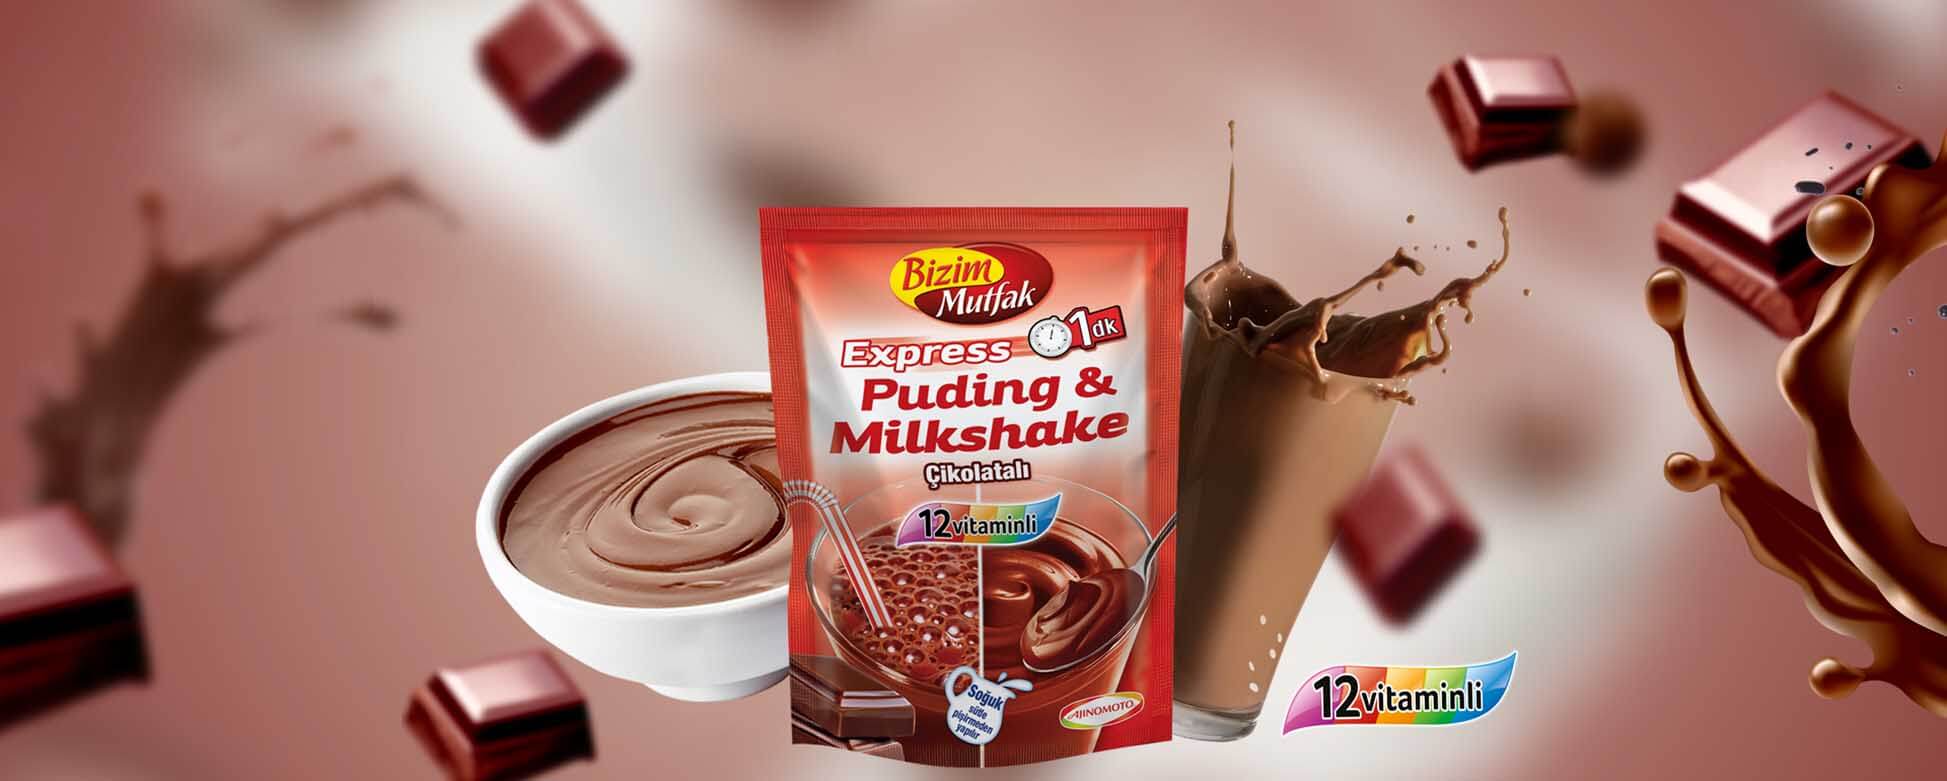 Çikolatalı Puding & Milkshake